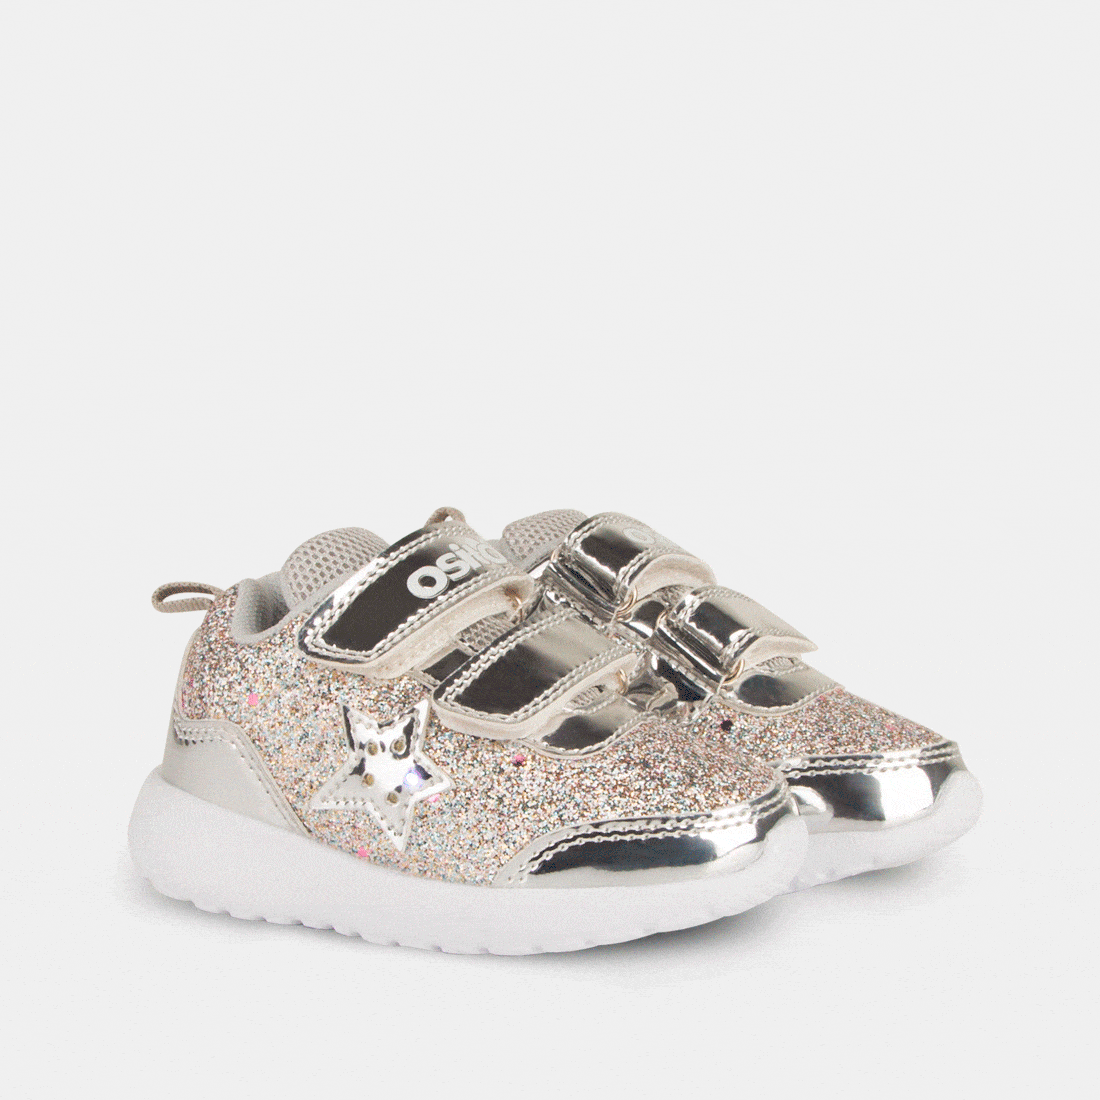 OSITO Shoes Zapatillas con Luces de Bebé Glitter Plata